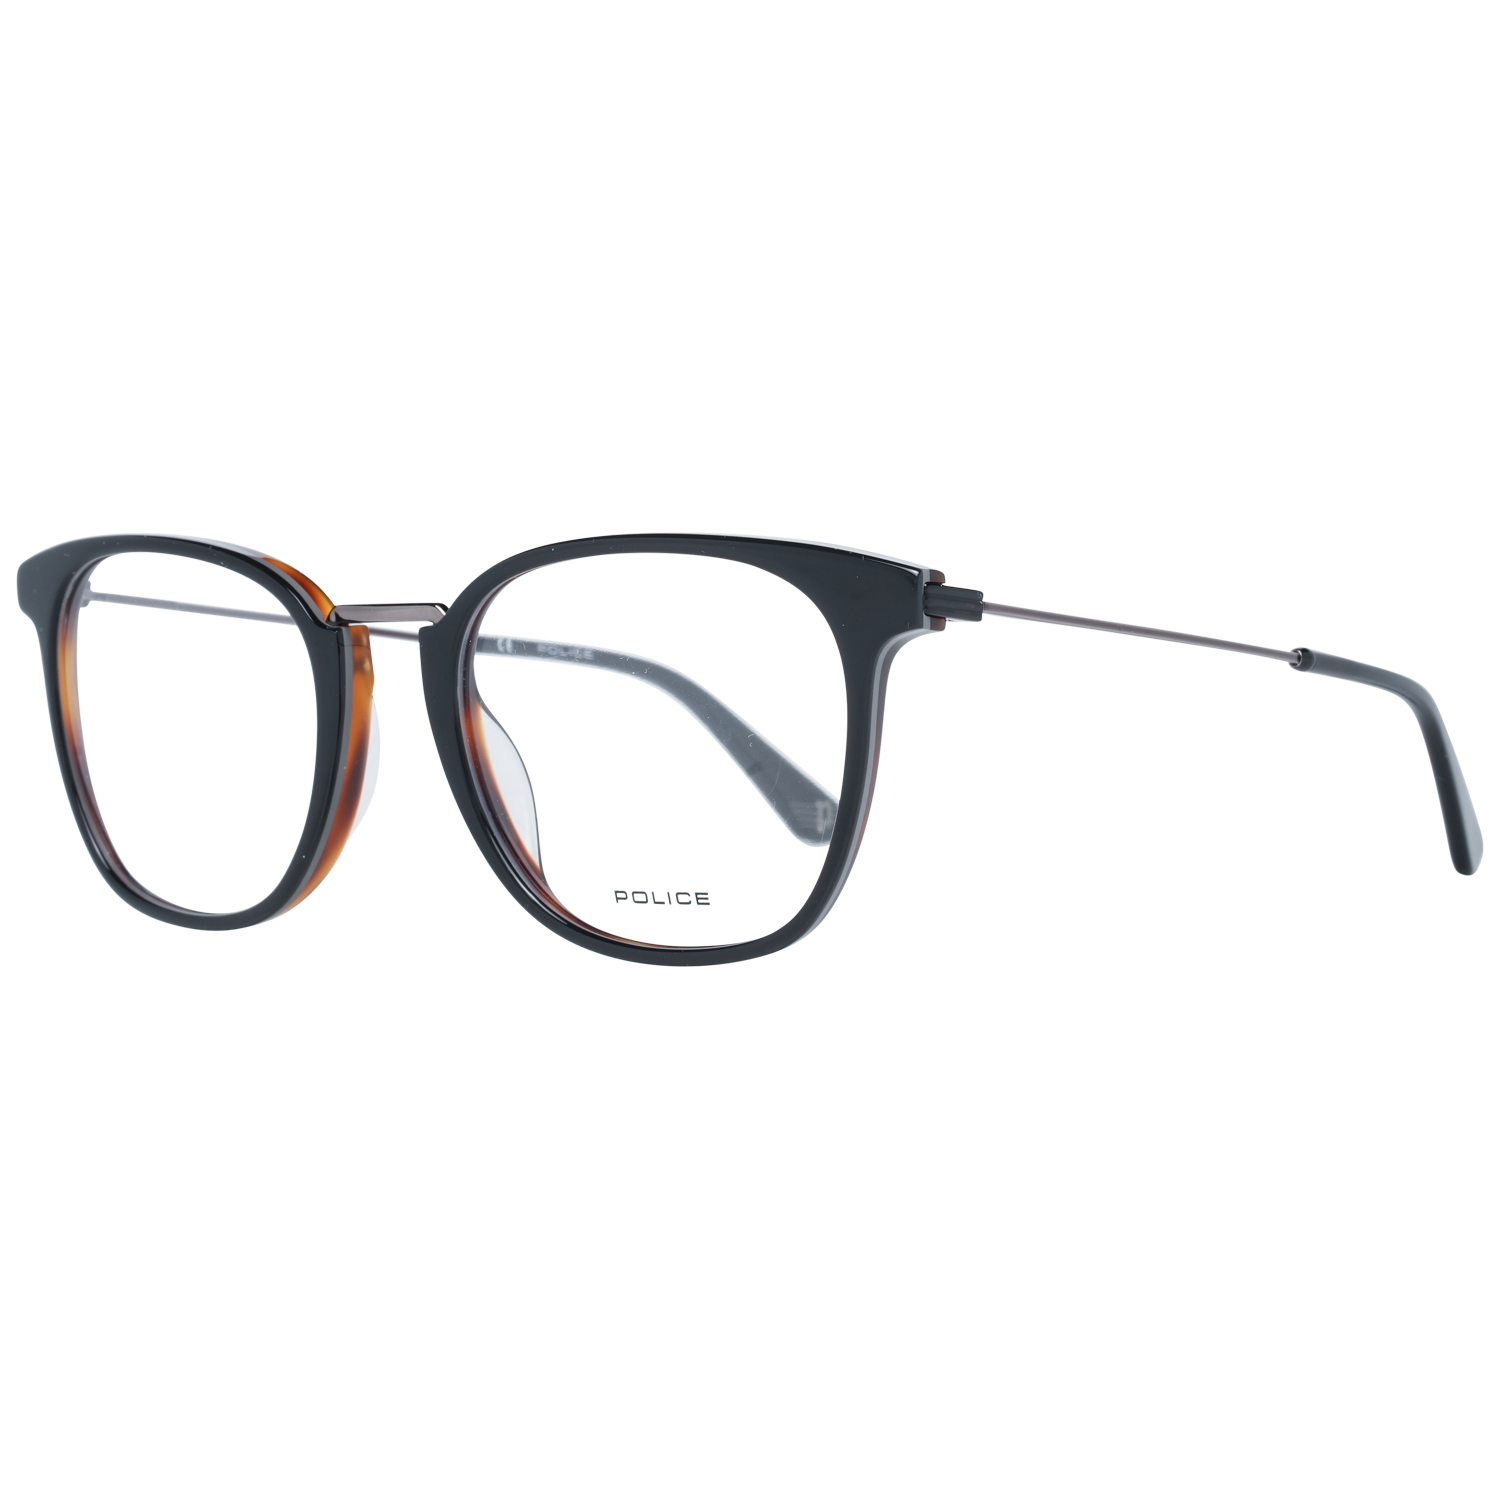 Police Frames Police Glasses Frames VPL686 0NK7 51 Eyeglasses Eyewear UK USA Australia 